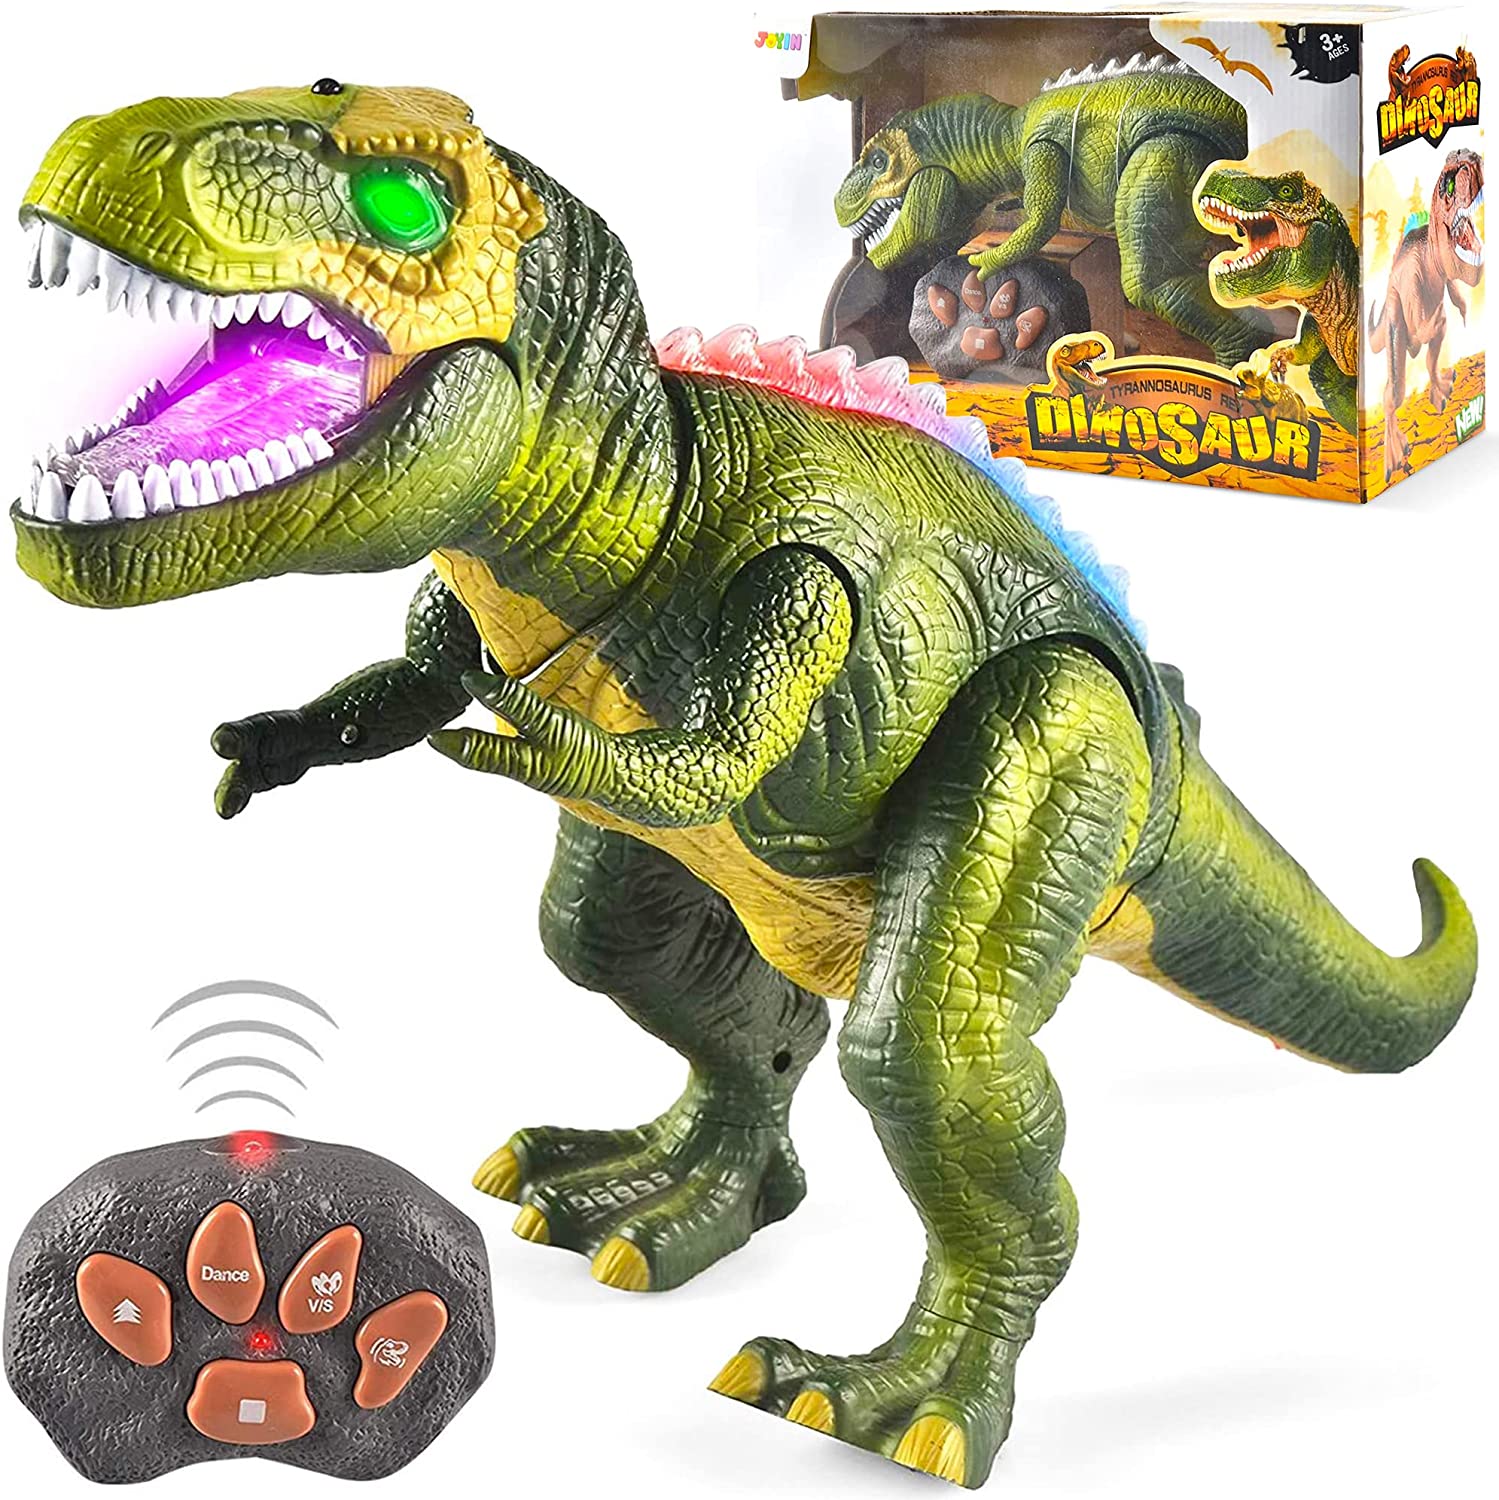 JOYIN Remote Controlled Walking & Light-Up Dinosaur Toy